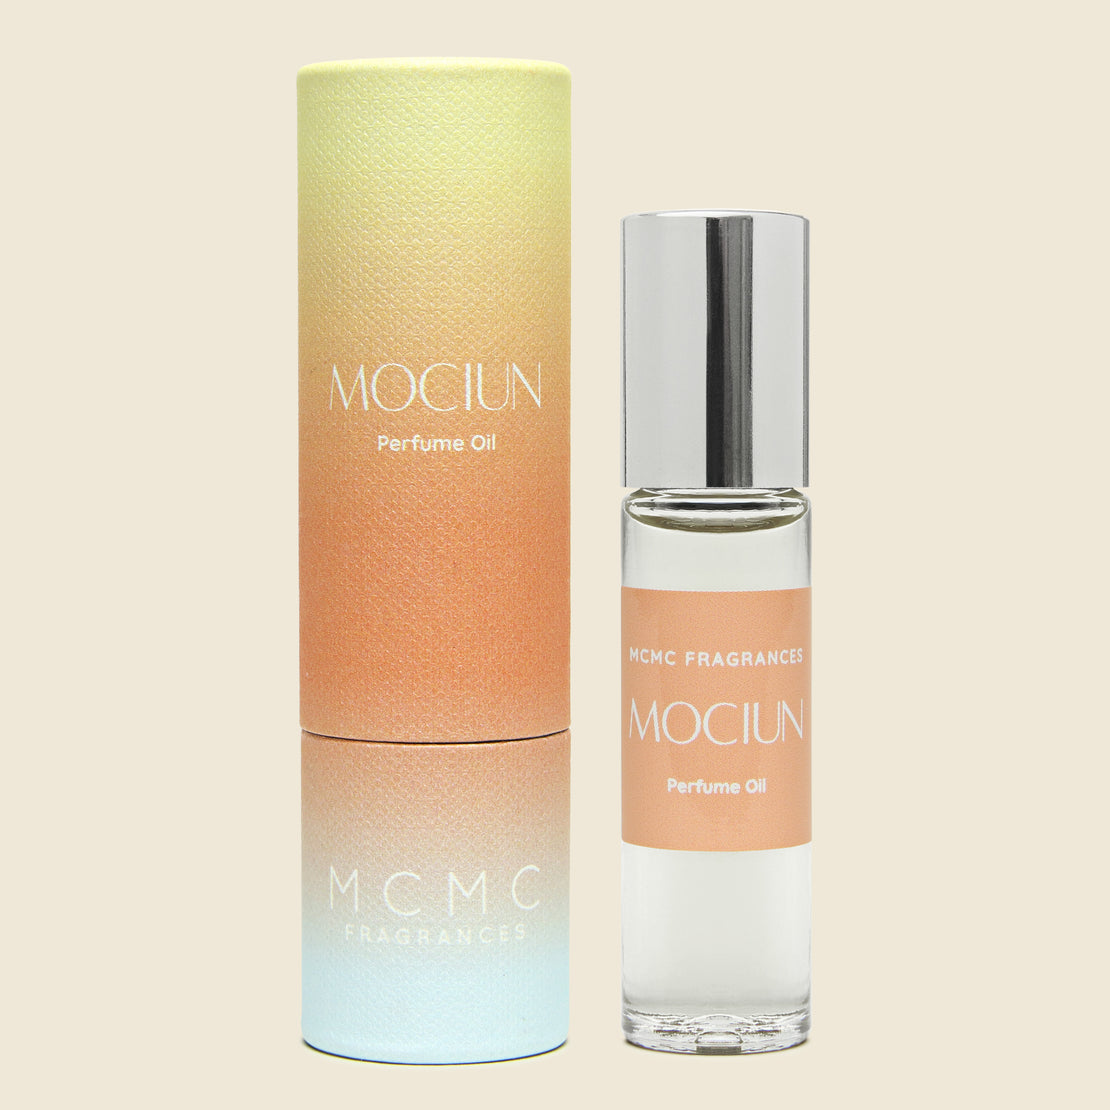 MCMC Fragrances Perfume Oil - MOCIUN, 9ml